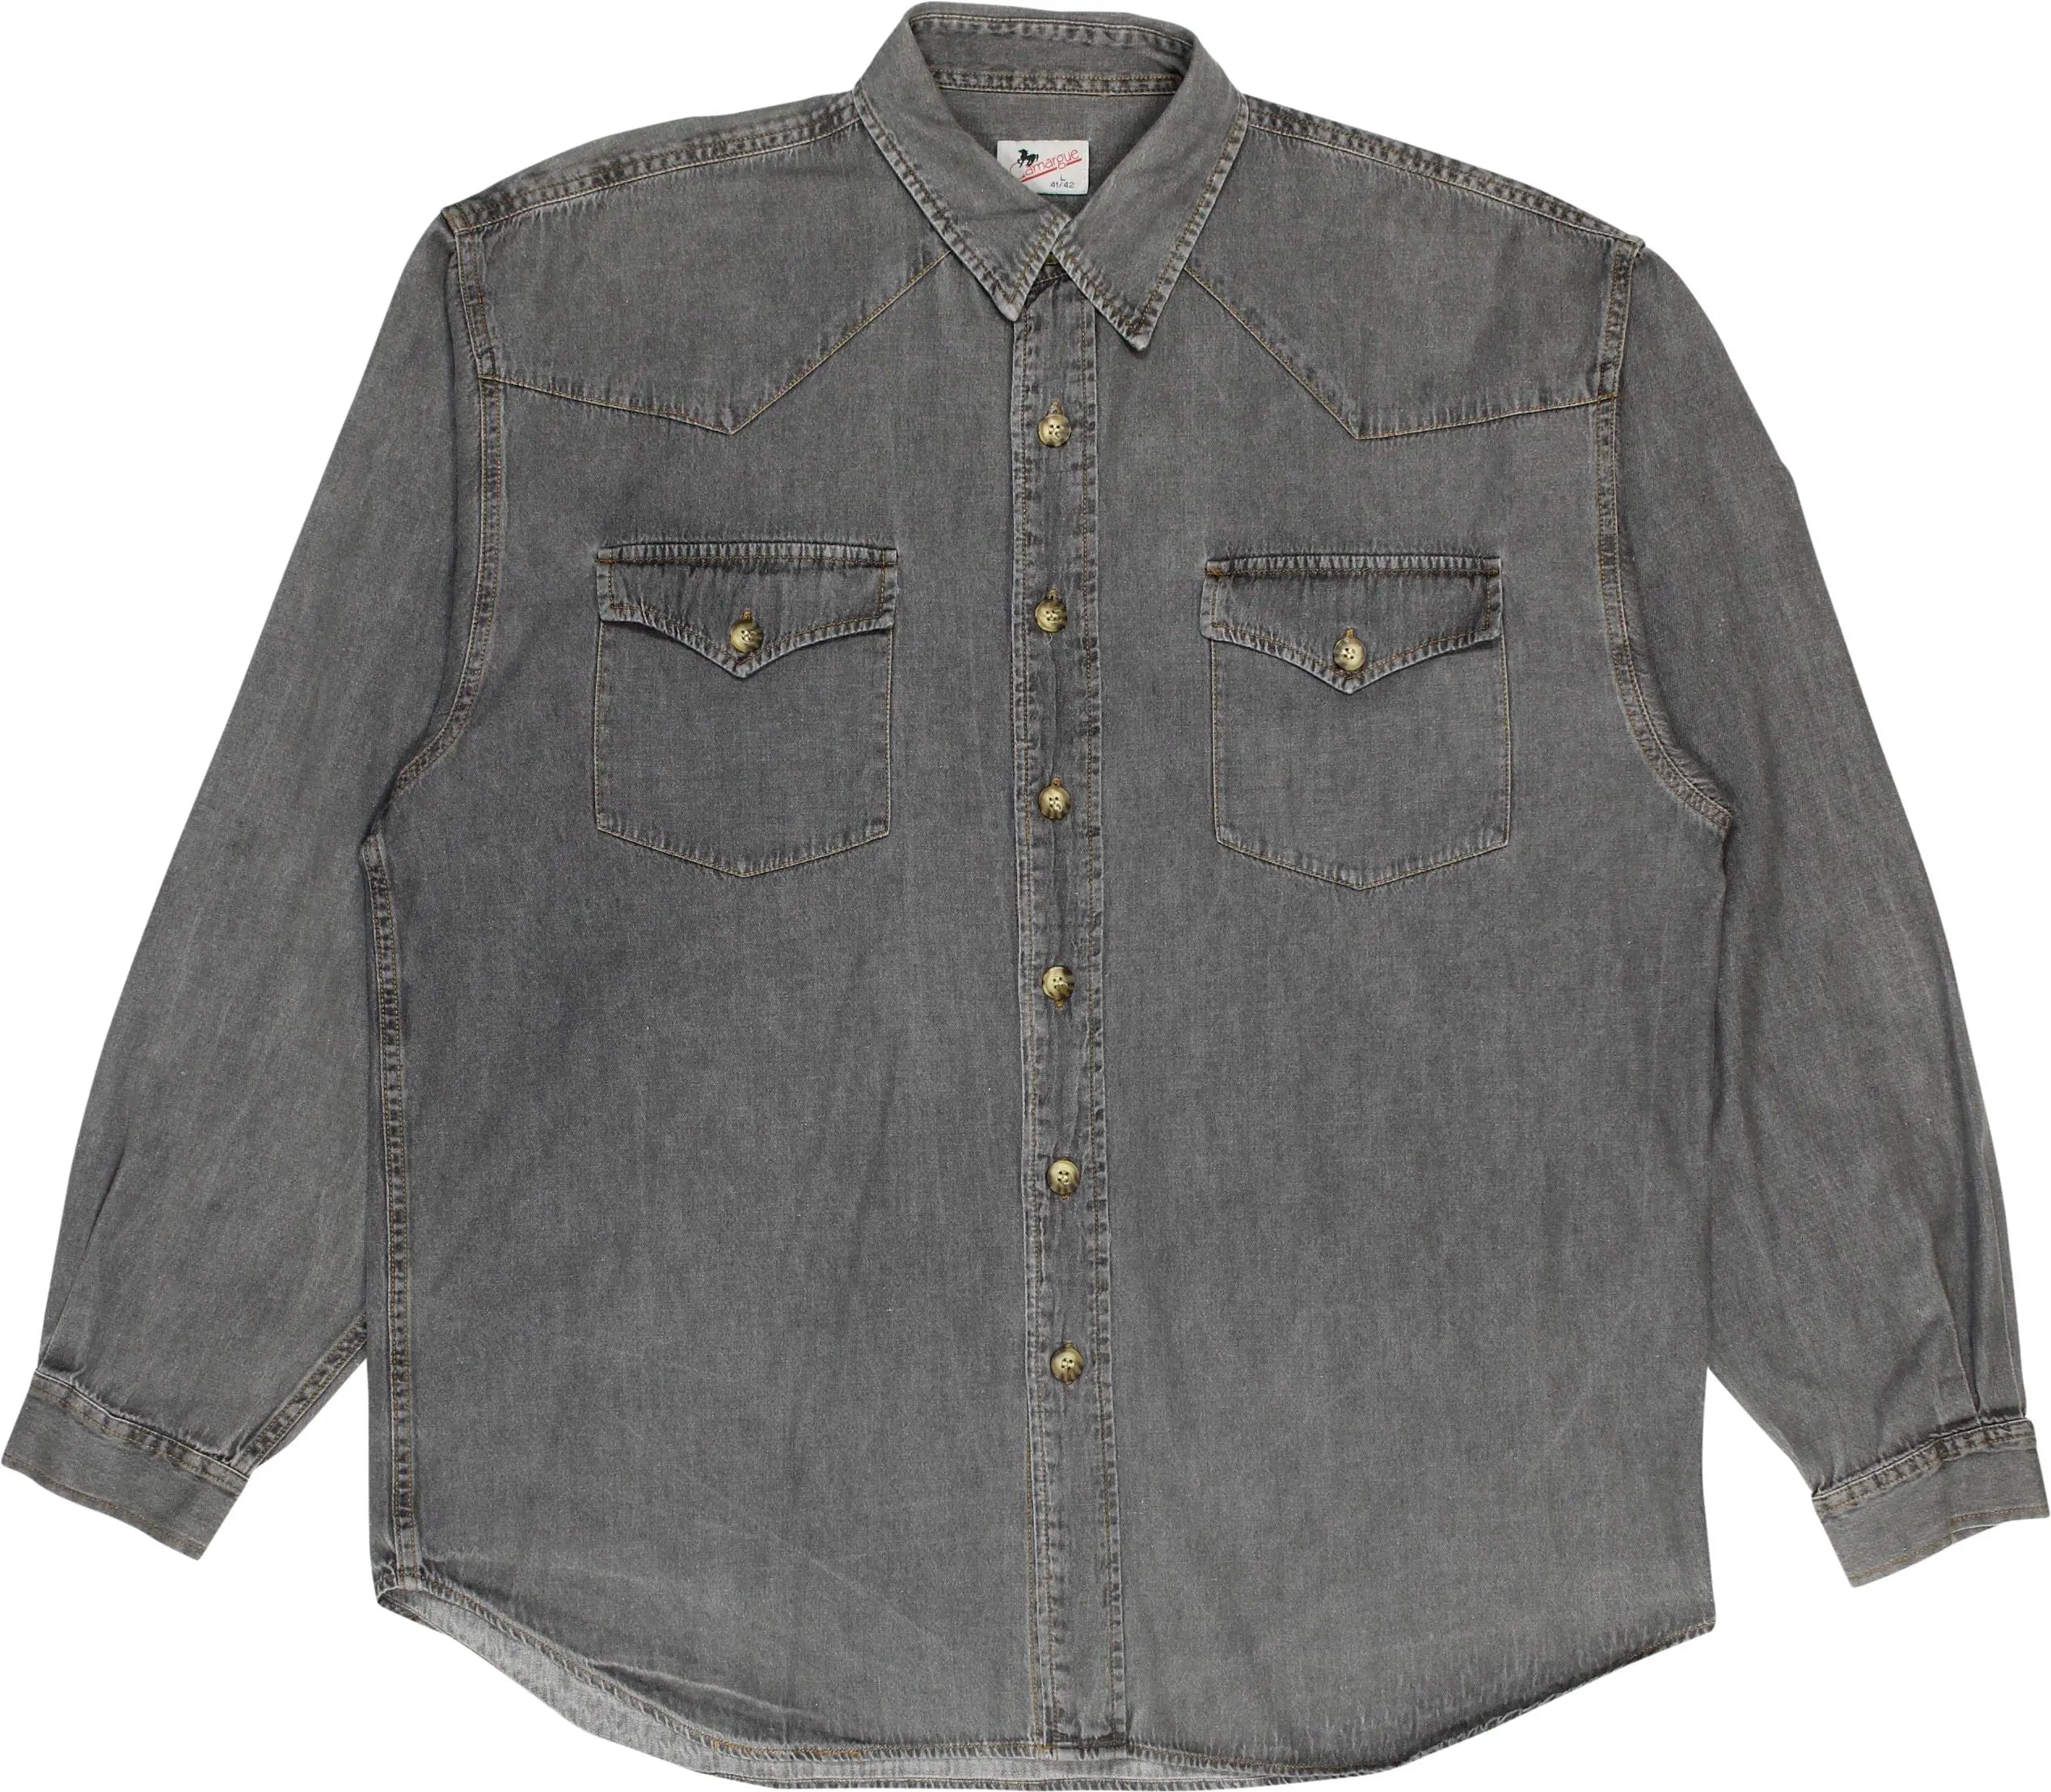 Camargue - Denim Shirt- ThriftTale.com - Vintage and second handclothing